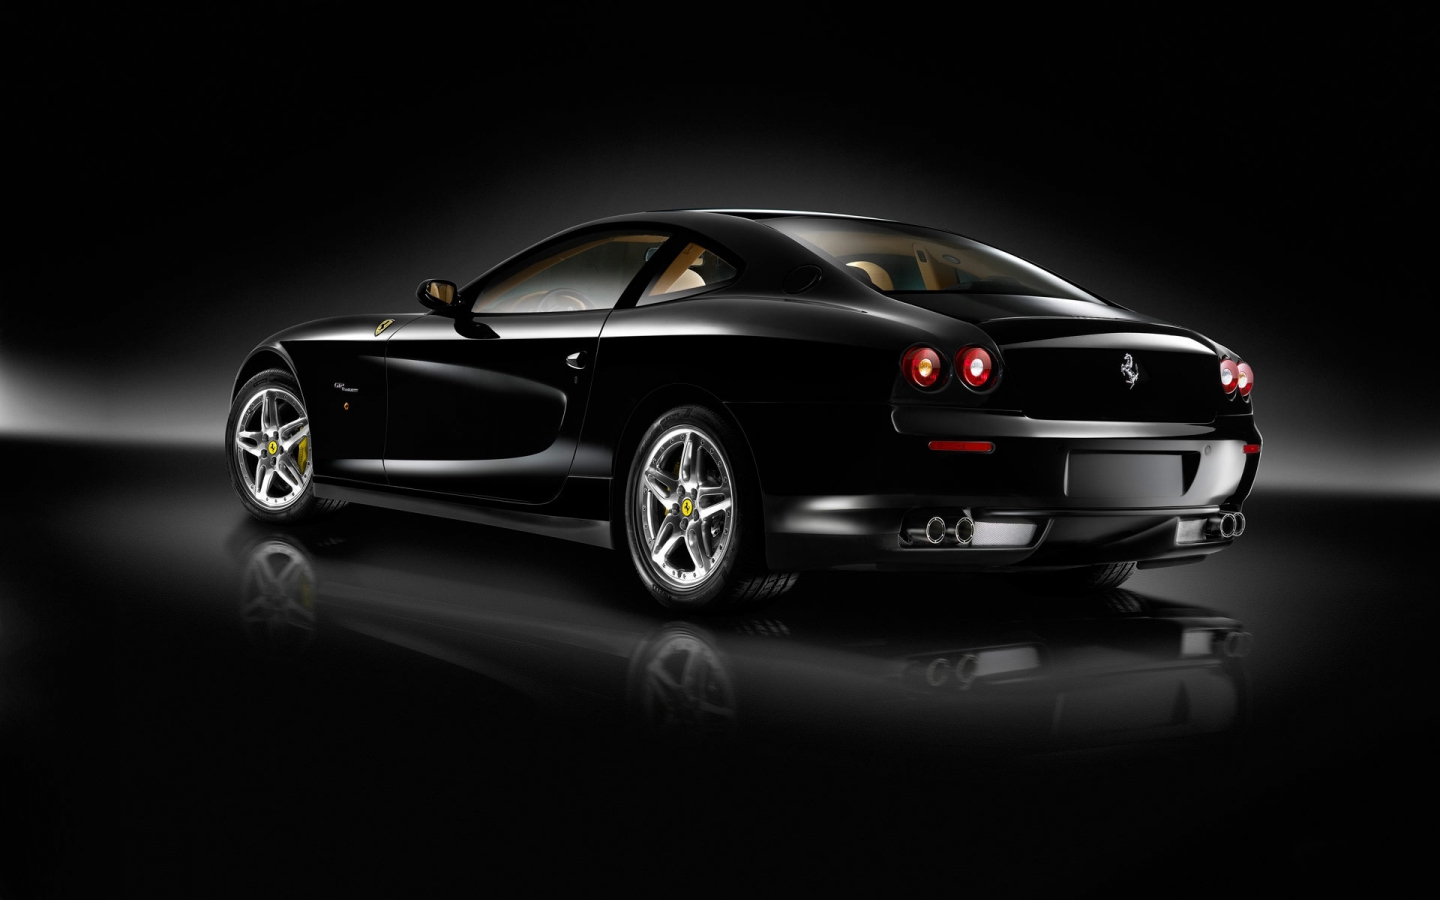 Superb Black Ferrari for 1440 x 900 widescreen resolution